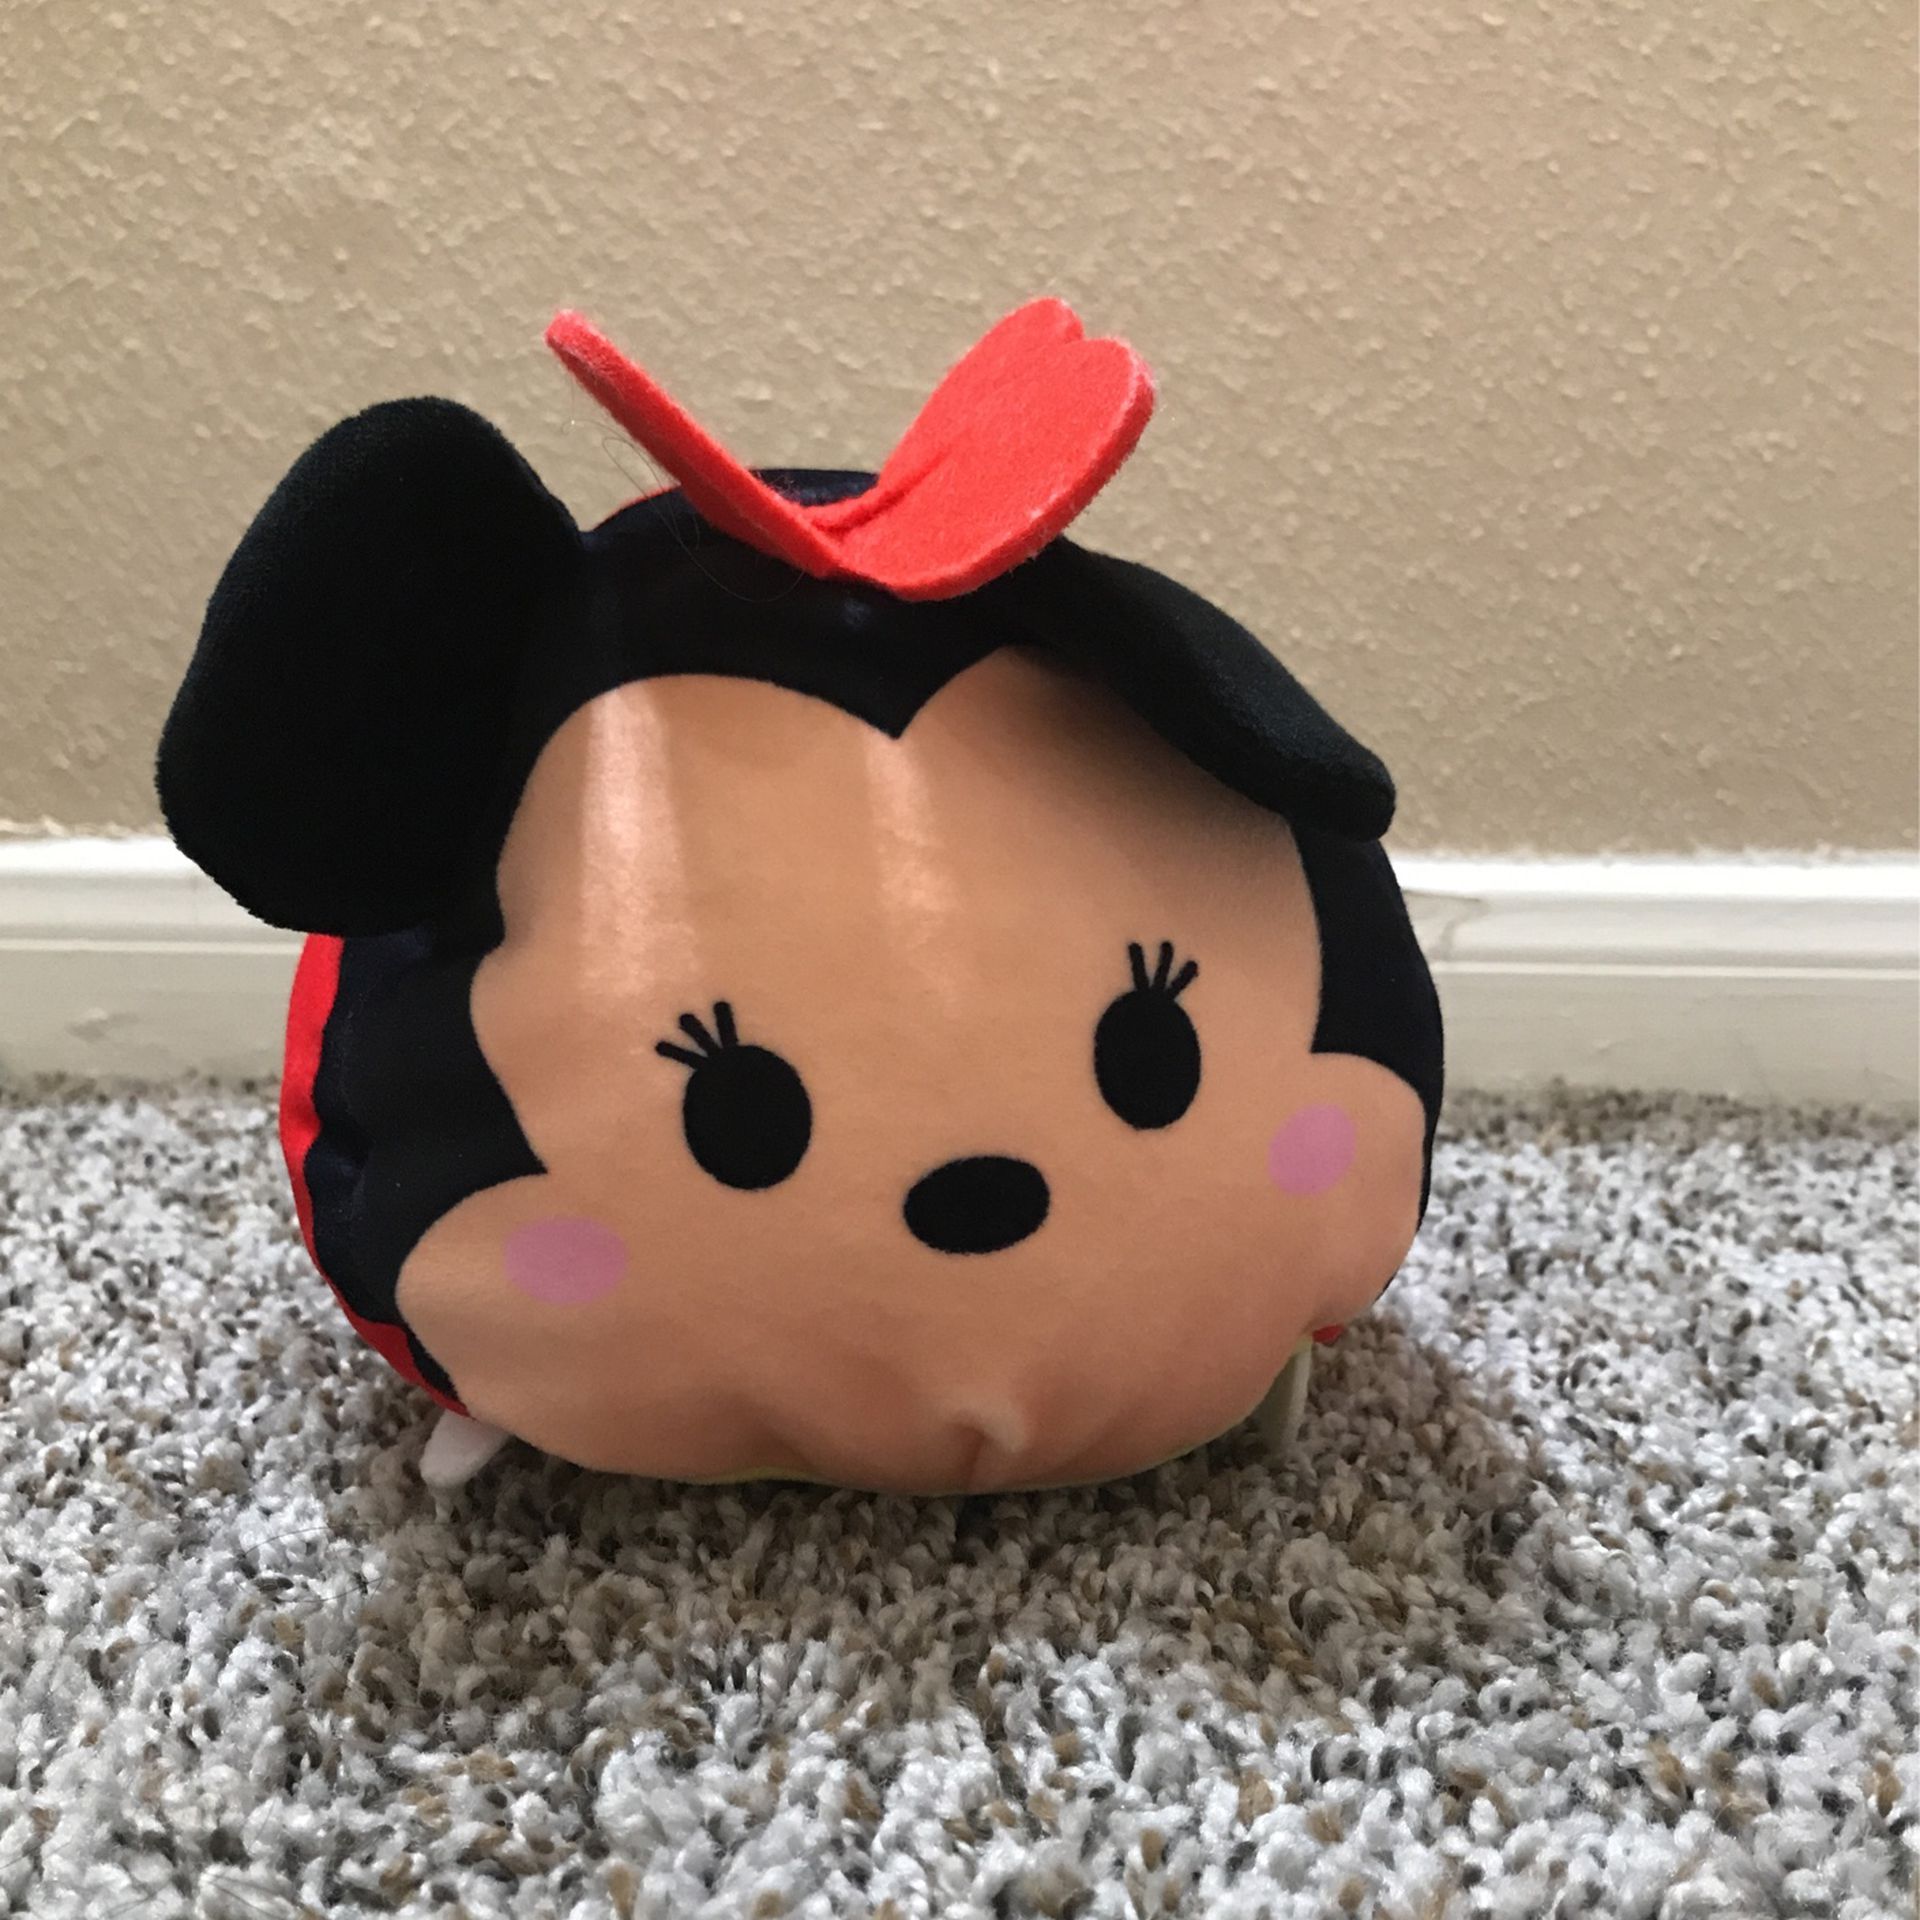 Minnie mouse plushy